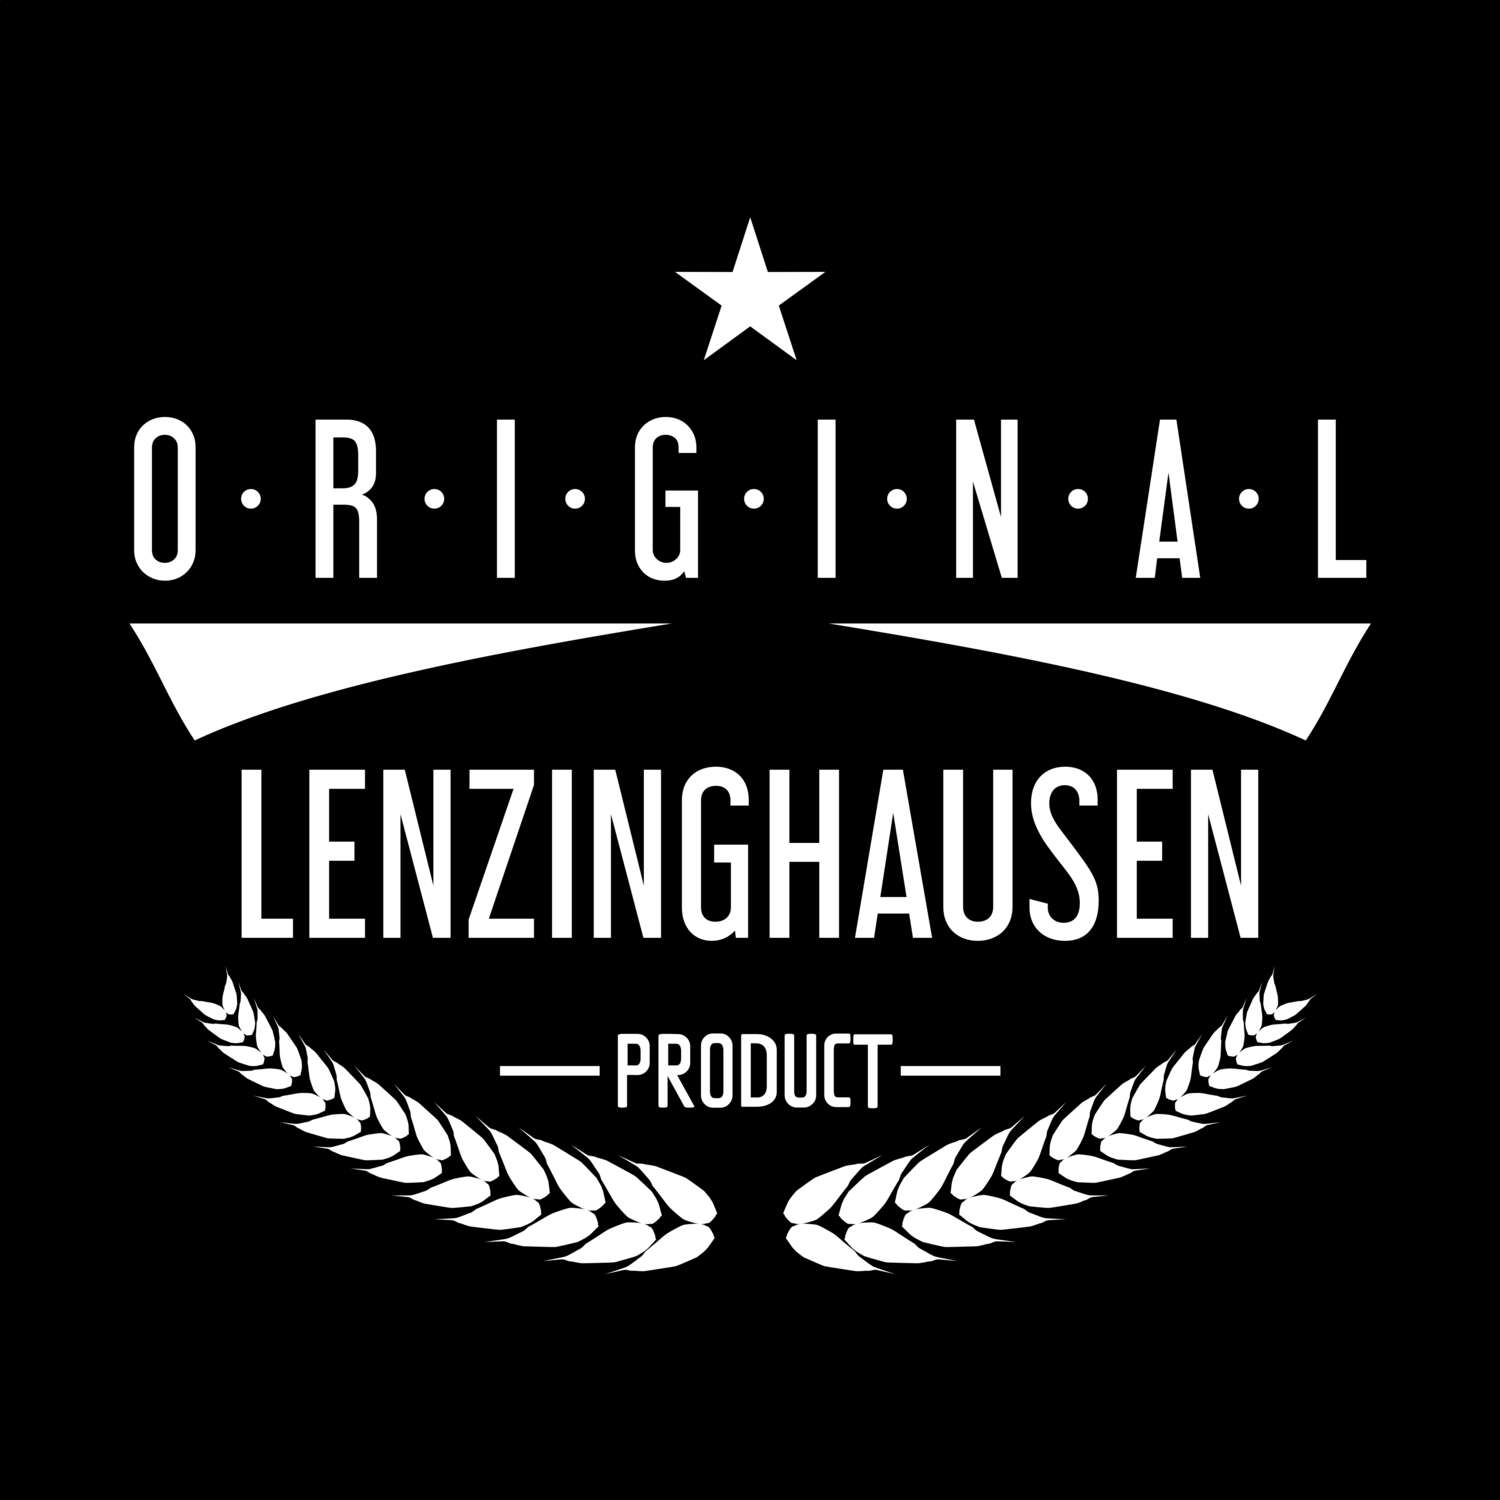 Lenzinghausen T-Shirt »Original Product«